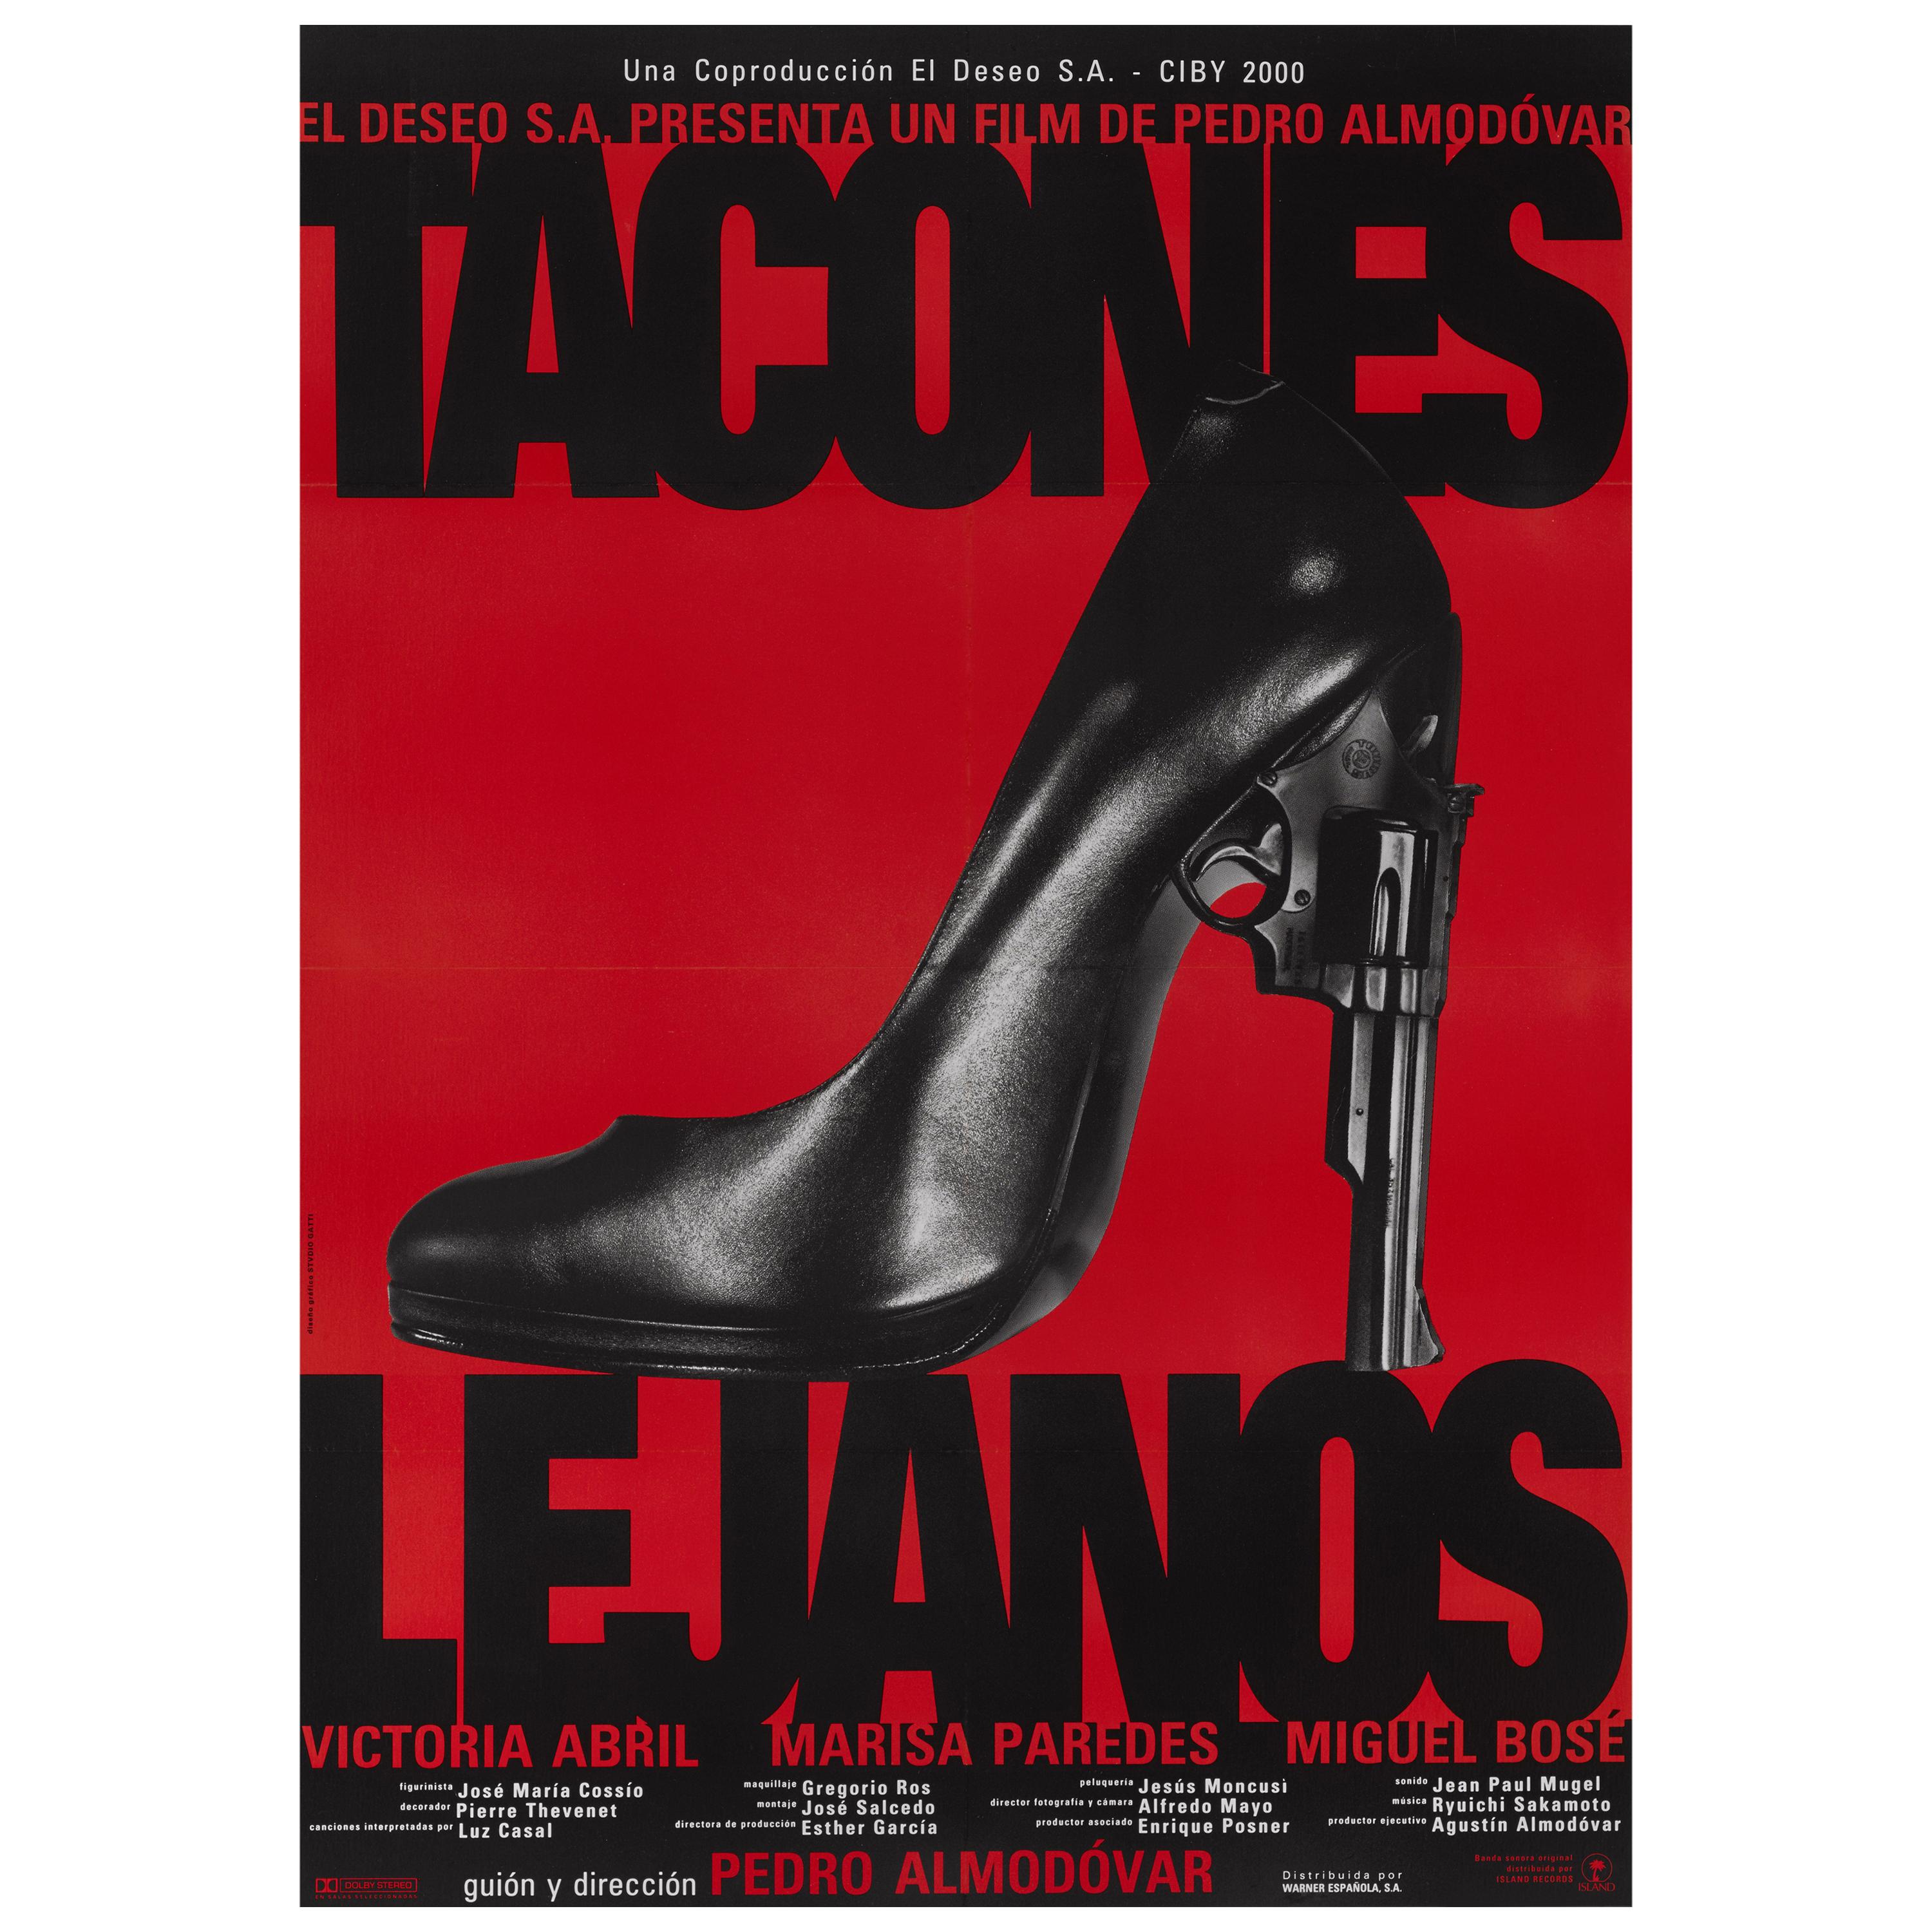 Tacones Lejanos / High Heels For Sale